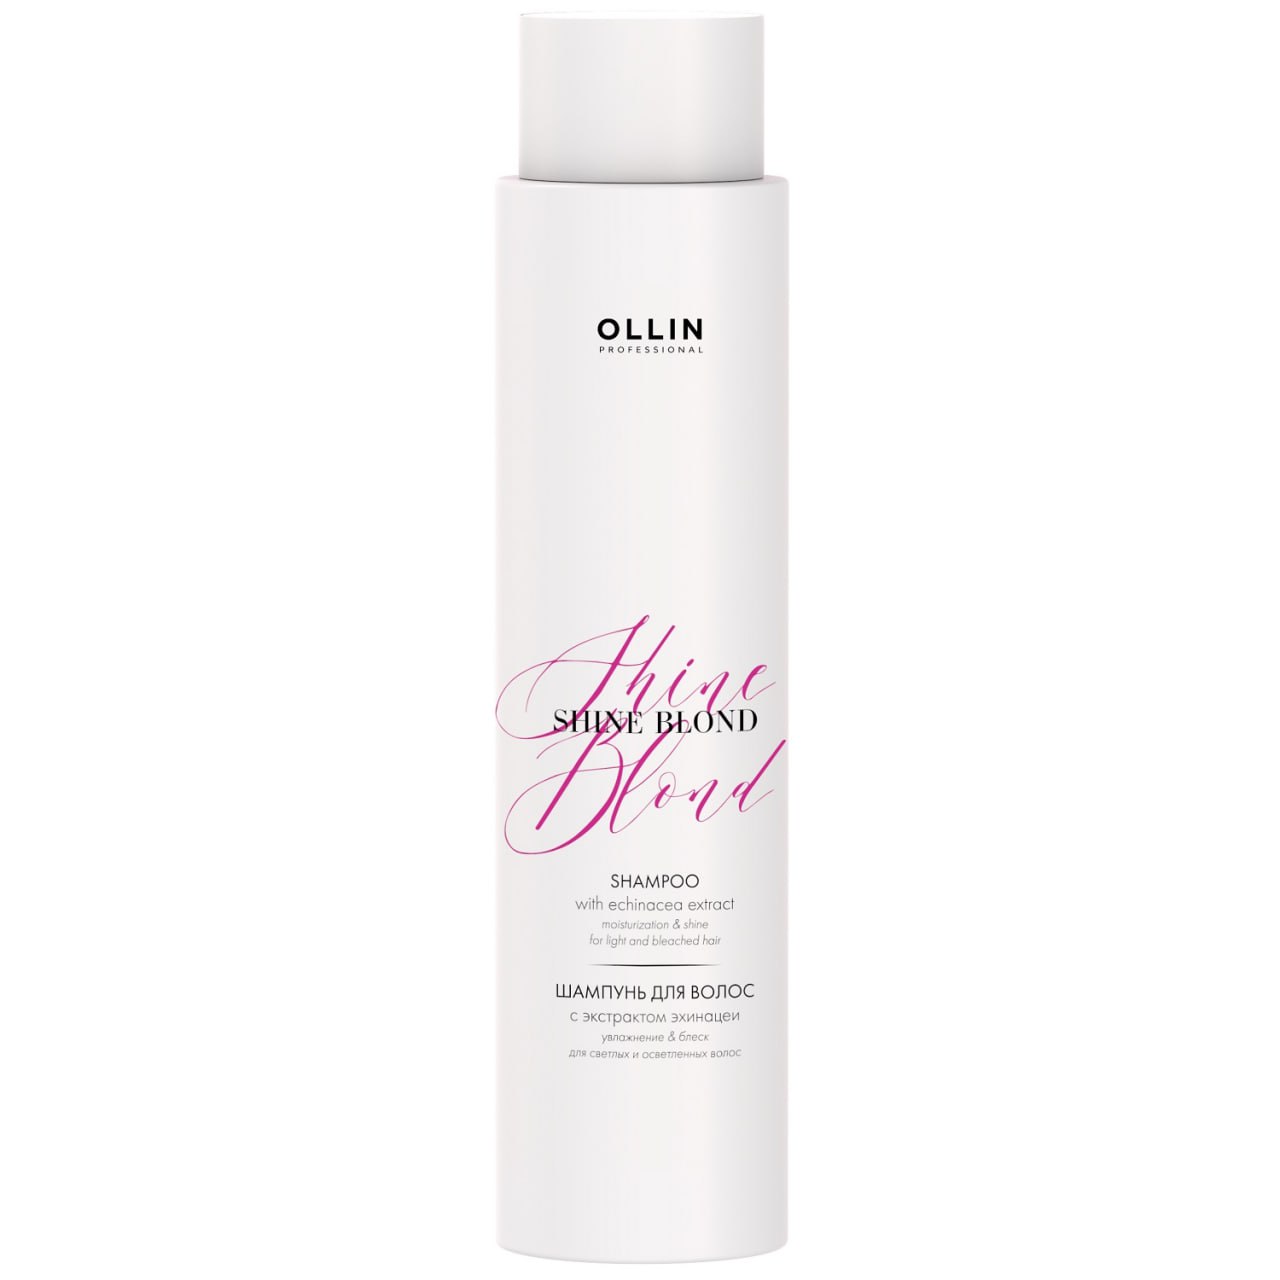 Ollin Professional Шампунь для волос с экстрактом эхинацеи, 300 мл (Ollin Professional, Shine Blond) цена и фото